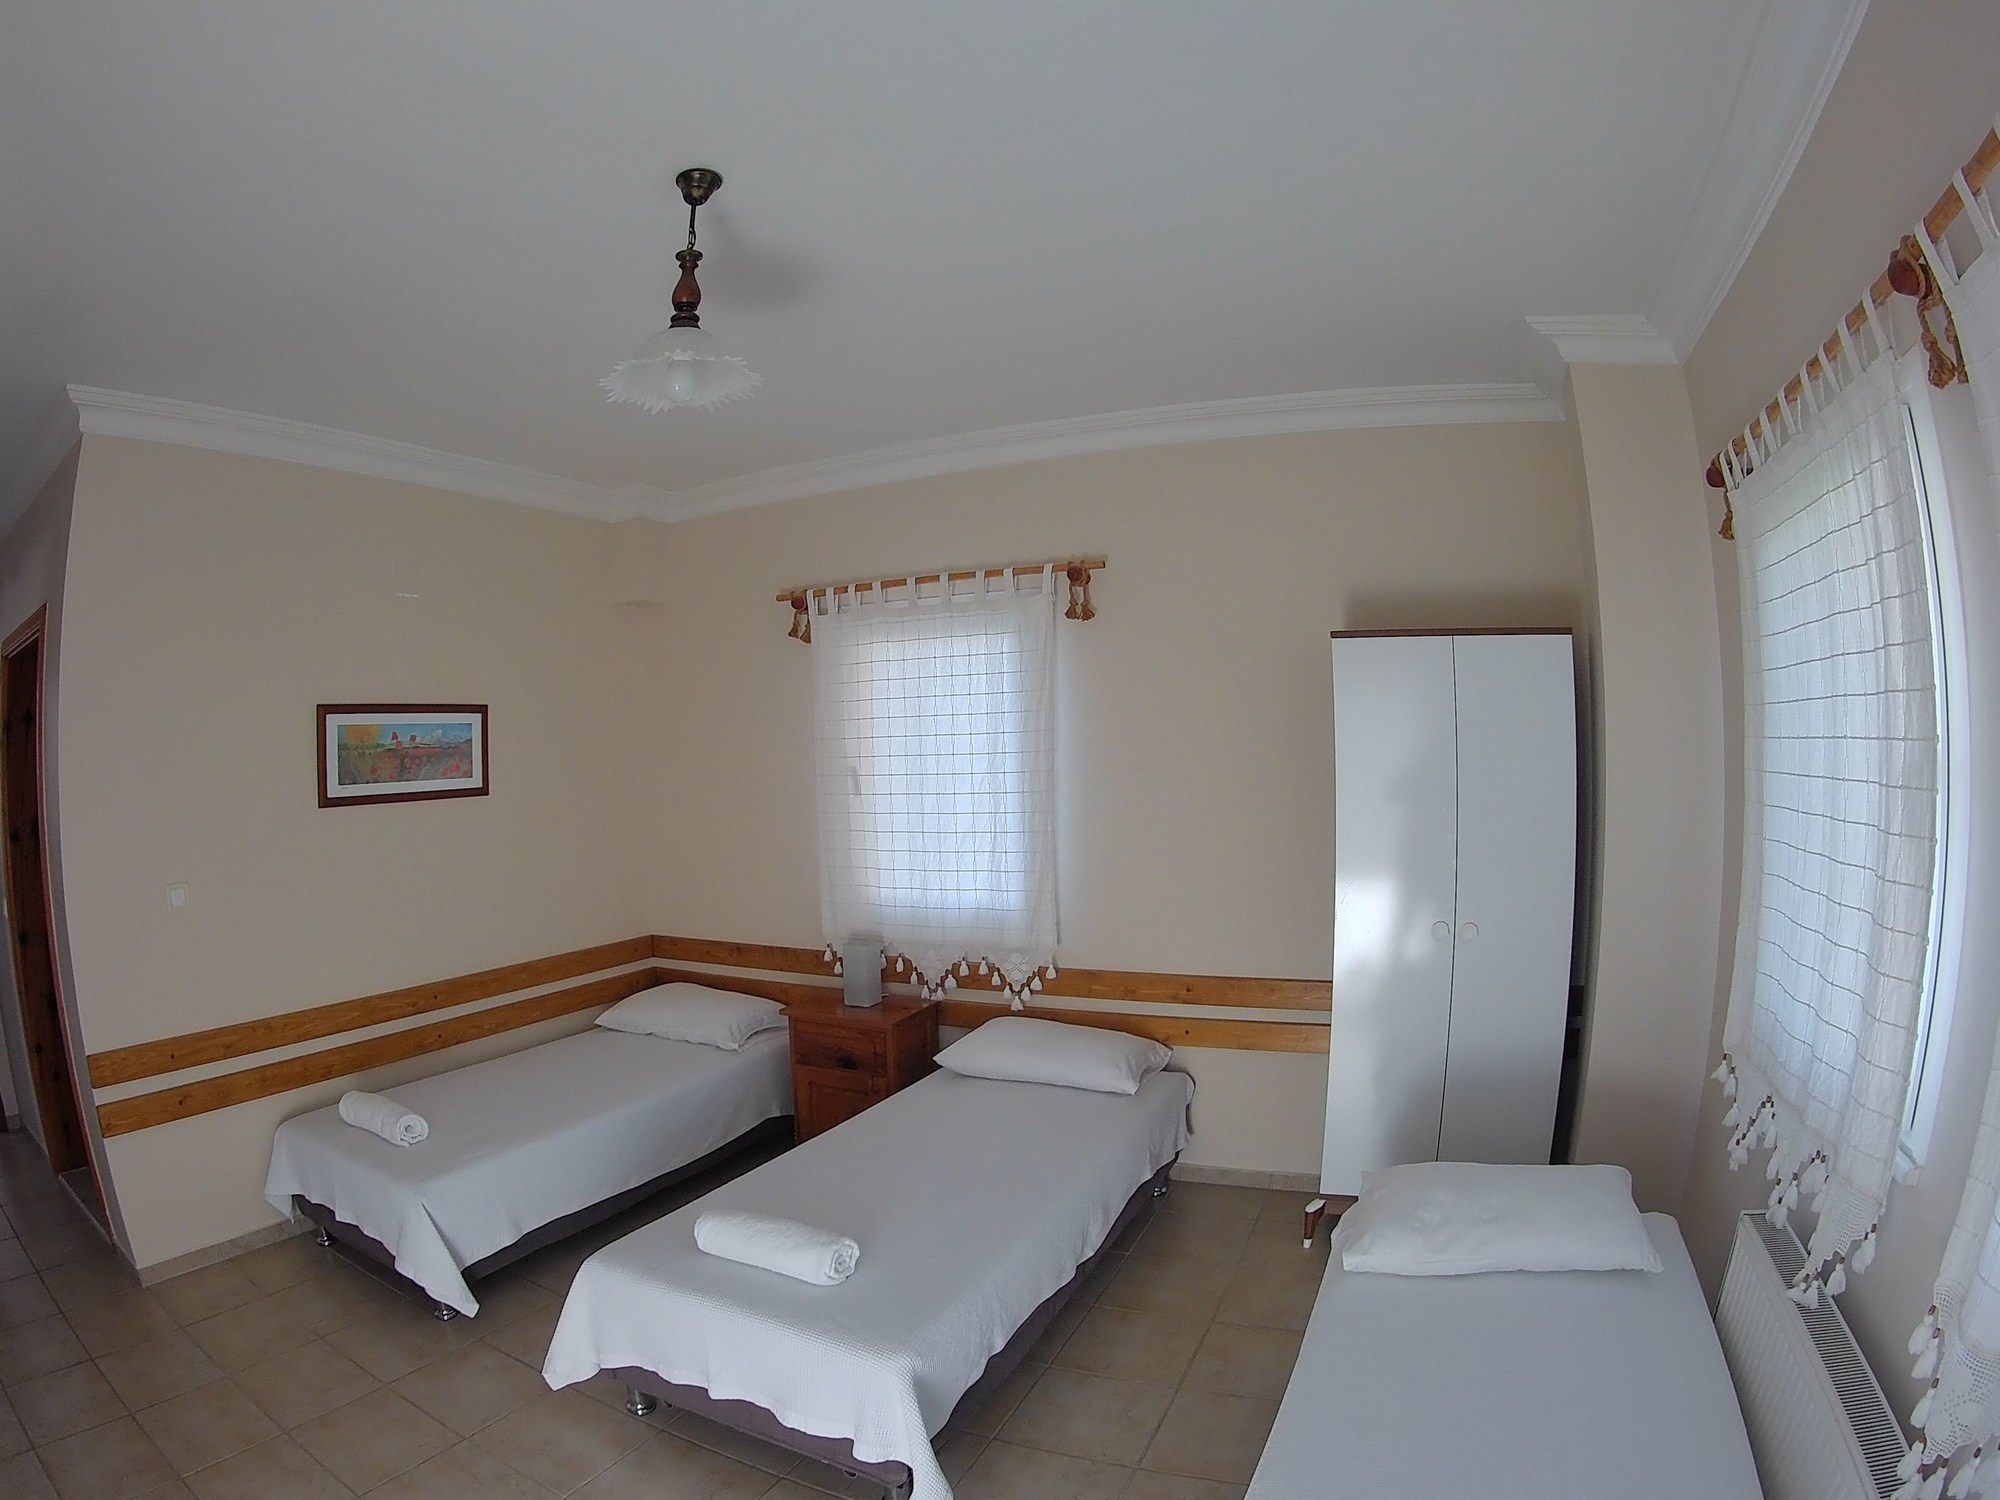 Sedir Resort - Hotel Rooms, Bungalows & Suites